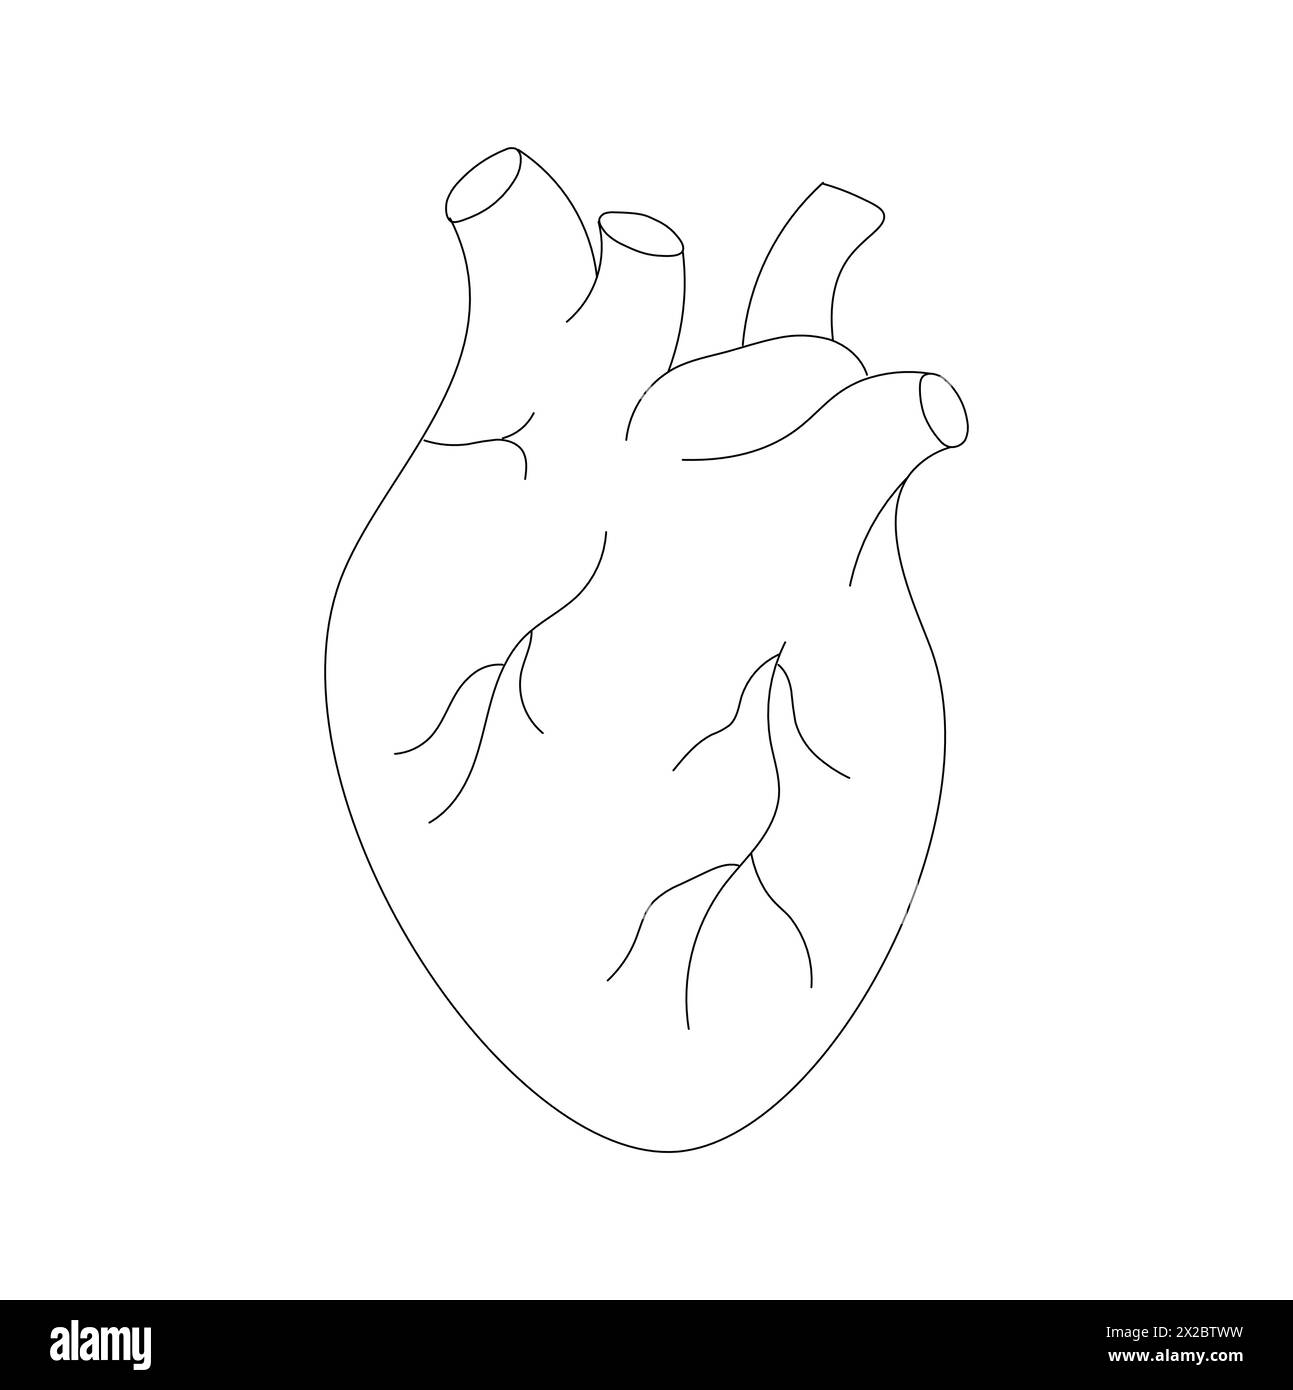 Heart Line Art - dessin minimaliste de coeur biologique. Illustration de l'icône de coeur de vecteur Illustration de Vecteur